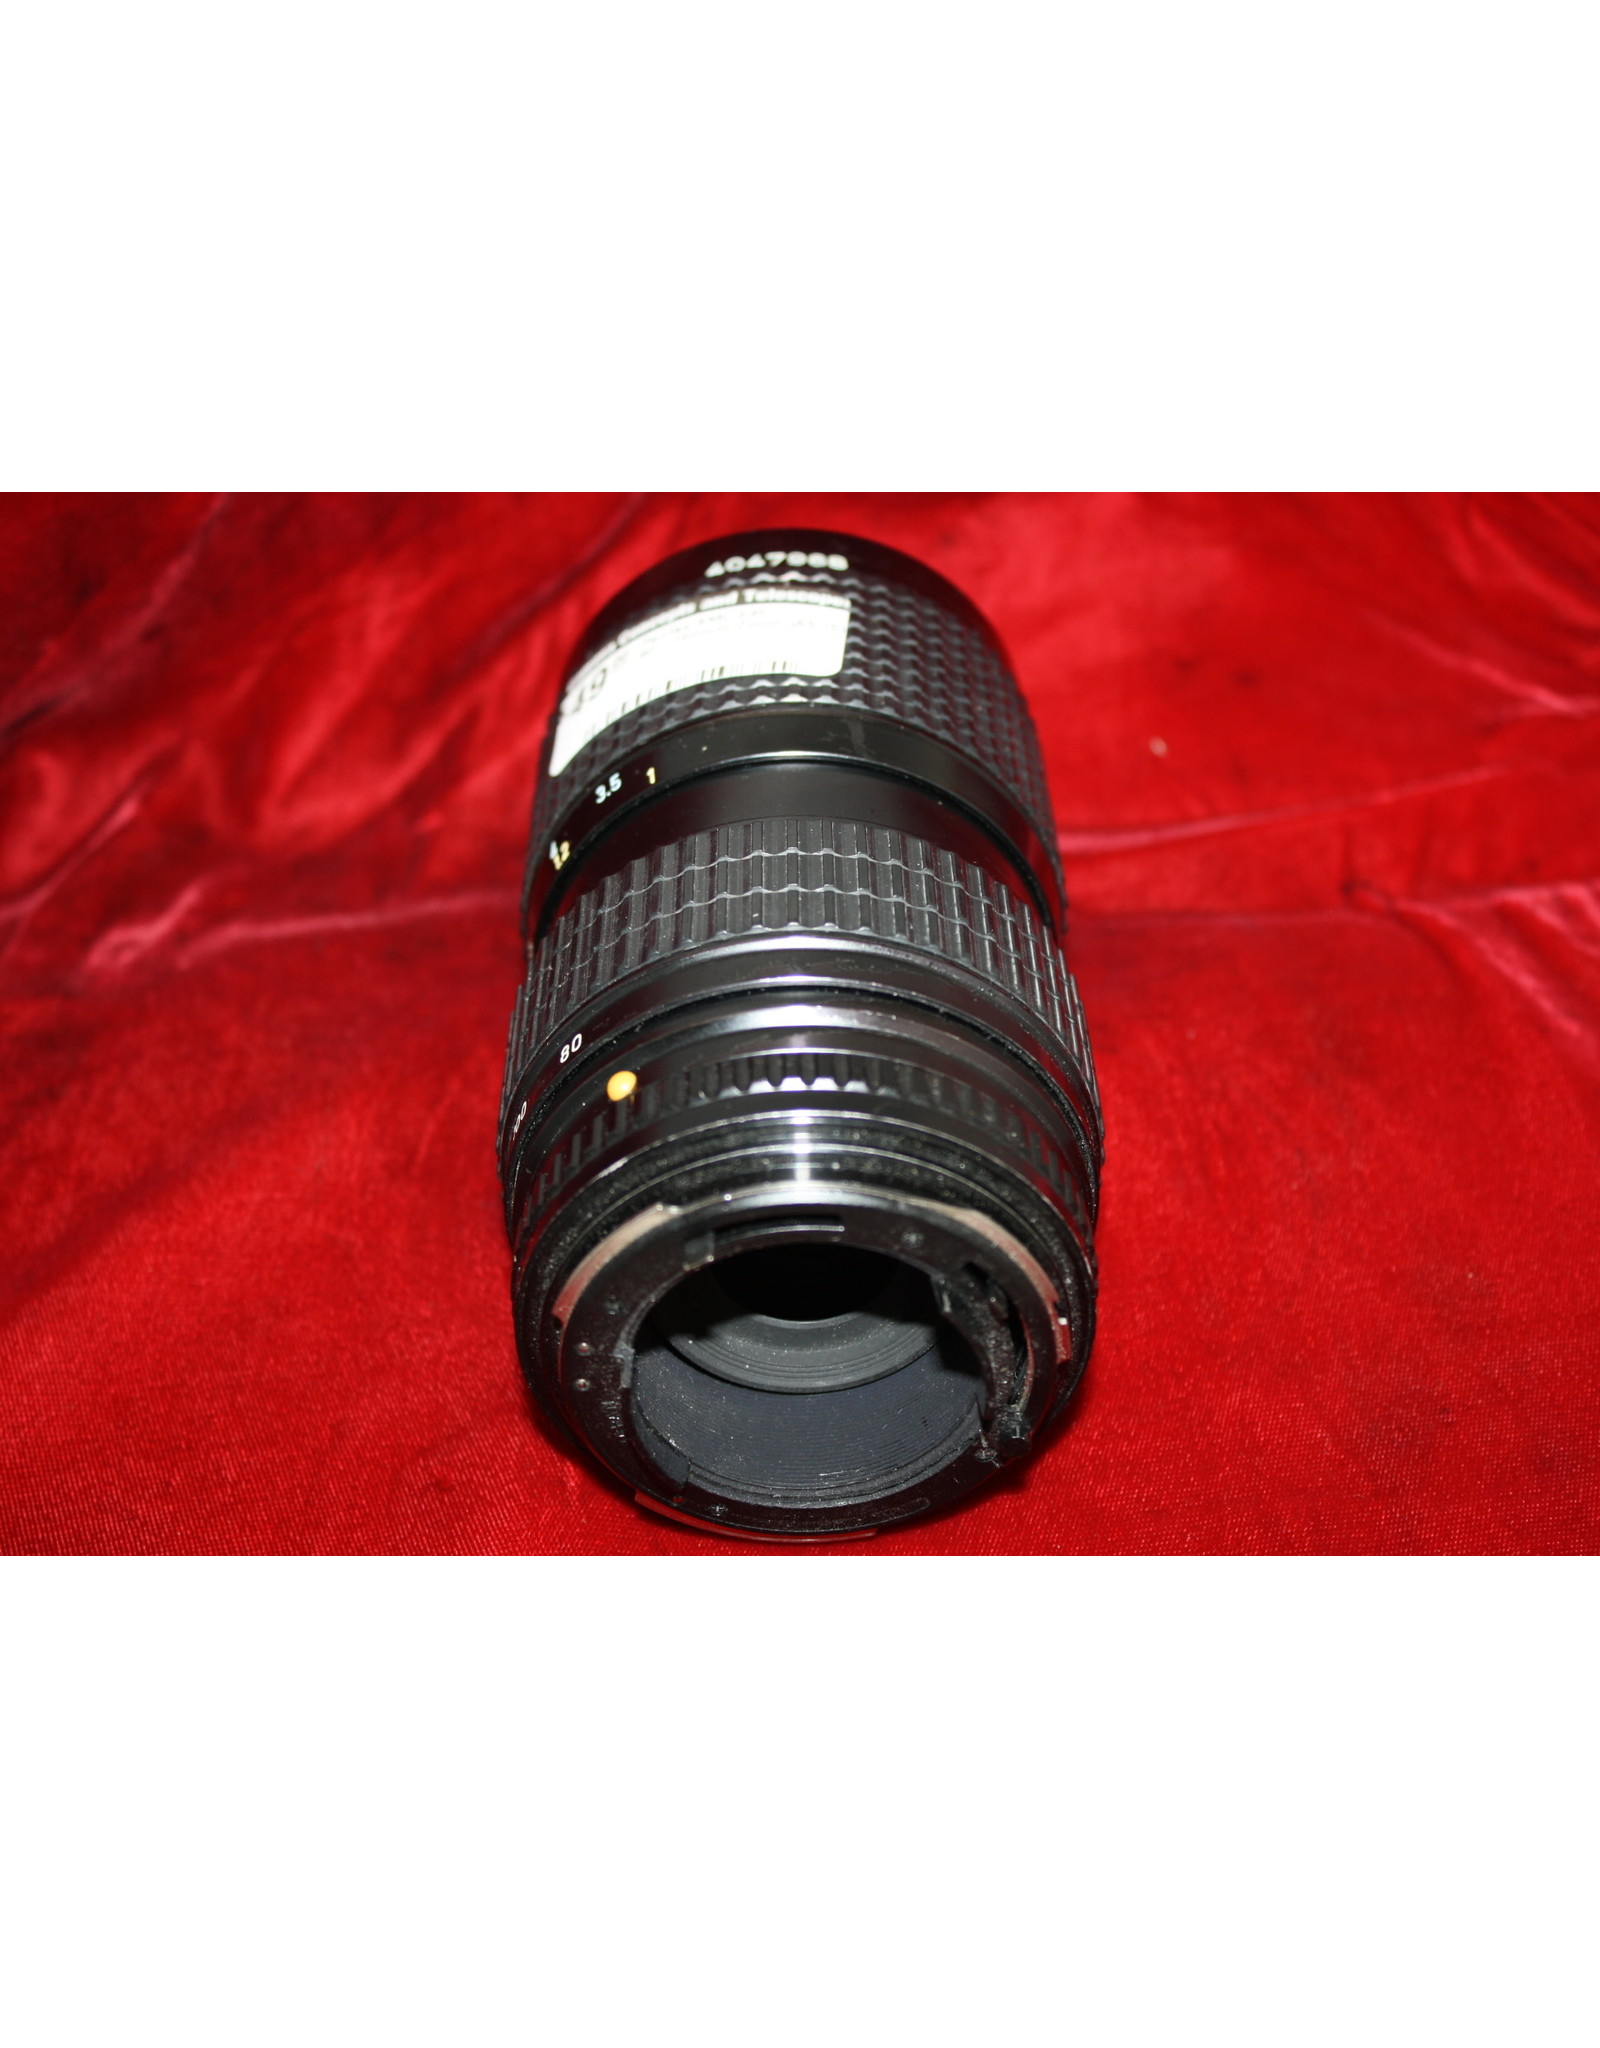 Pentax SMC 645 80-160mm Zoom (AS IS)